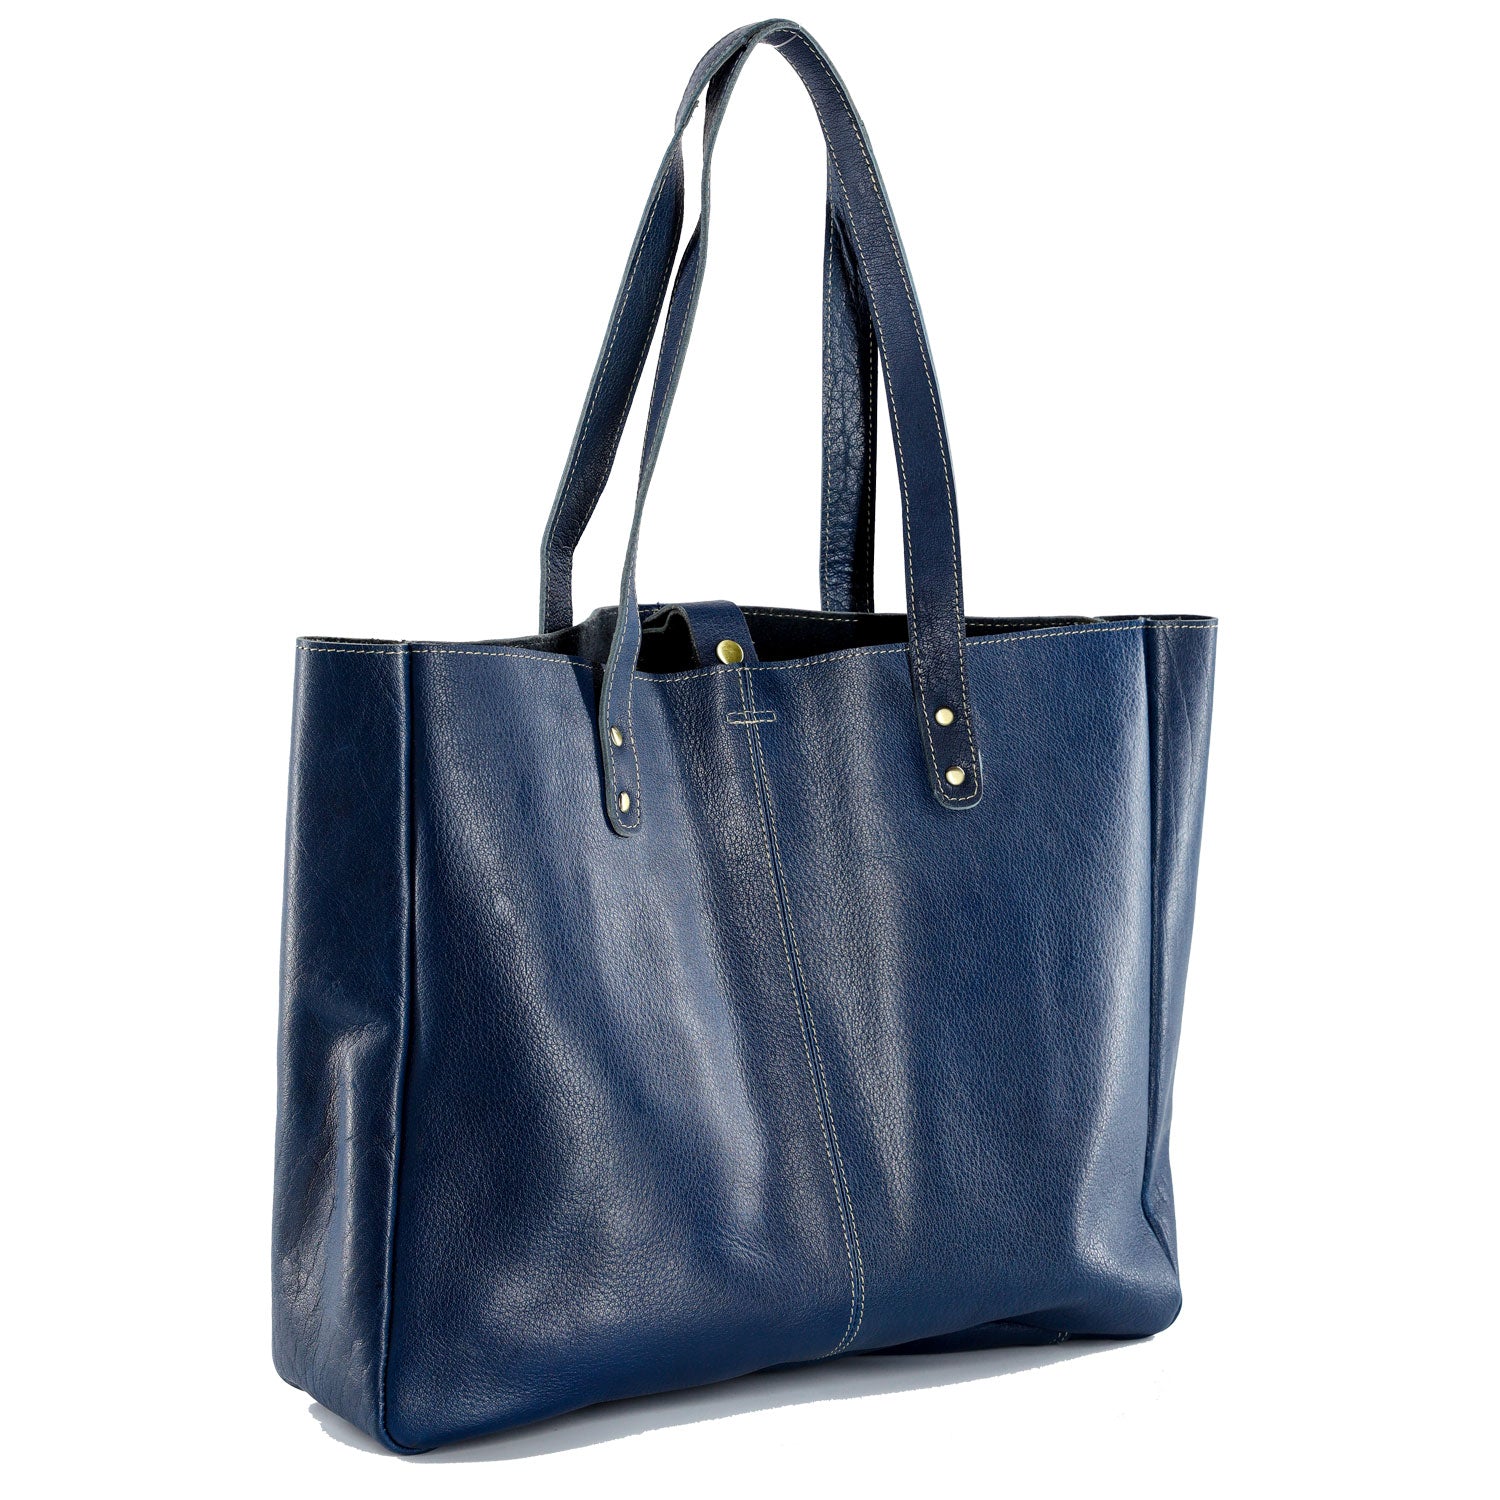 Royal blue handbag for events | INVITADISIMA